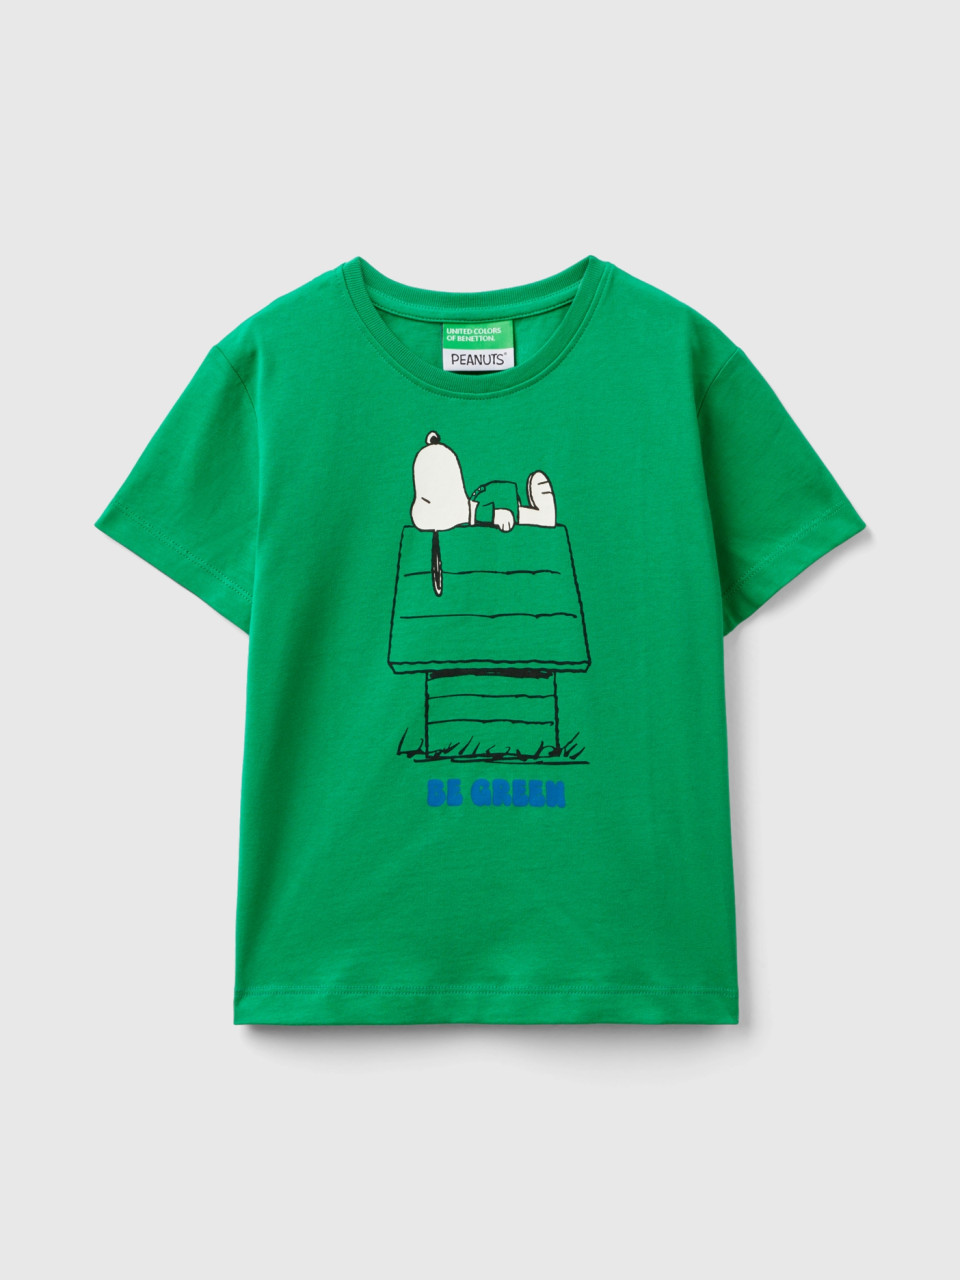 Benetton, ©peanuts T-shirt In Pure Cotton, Green, Kids